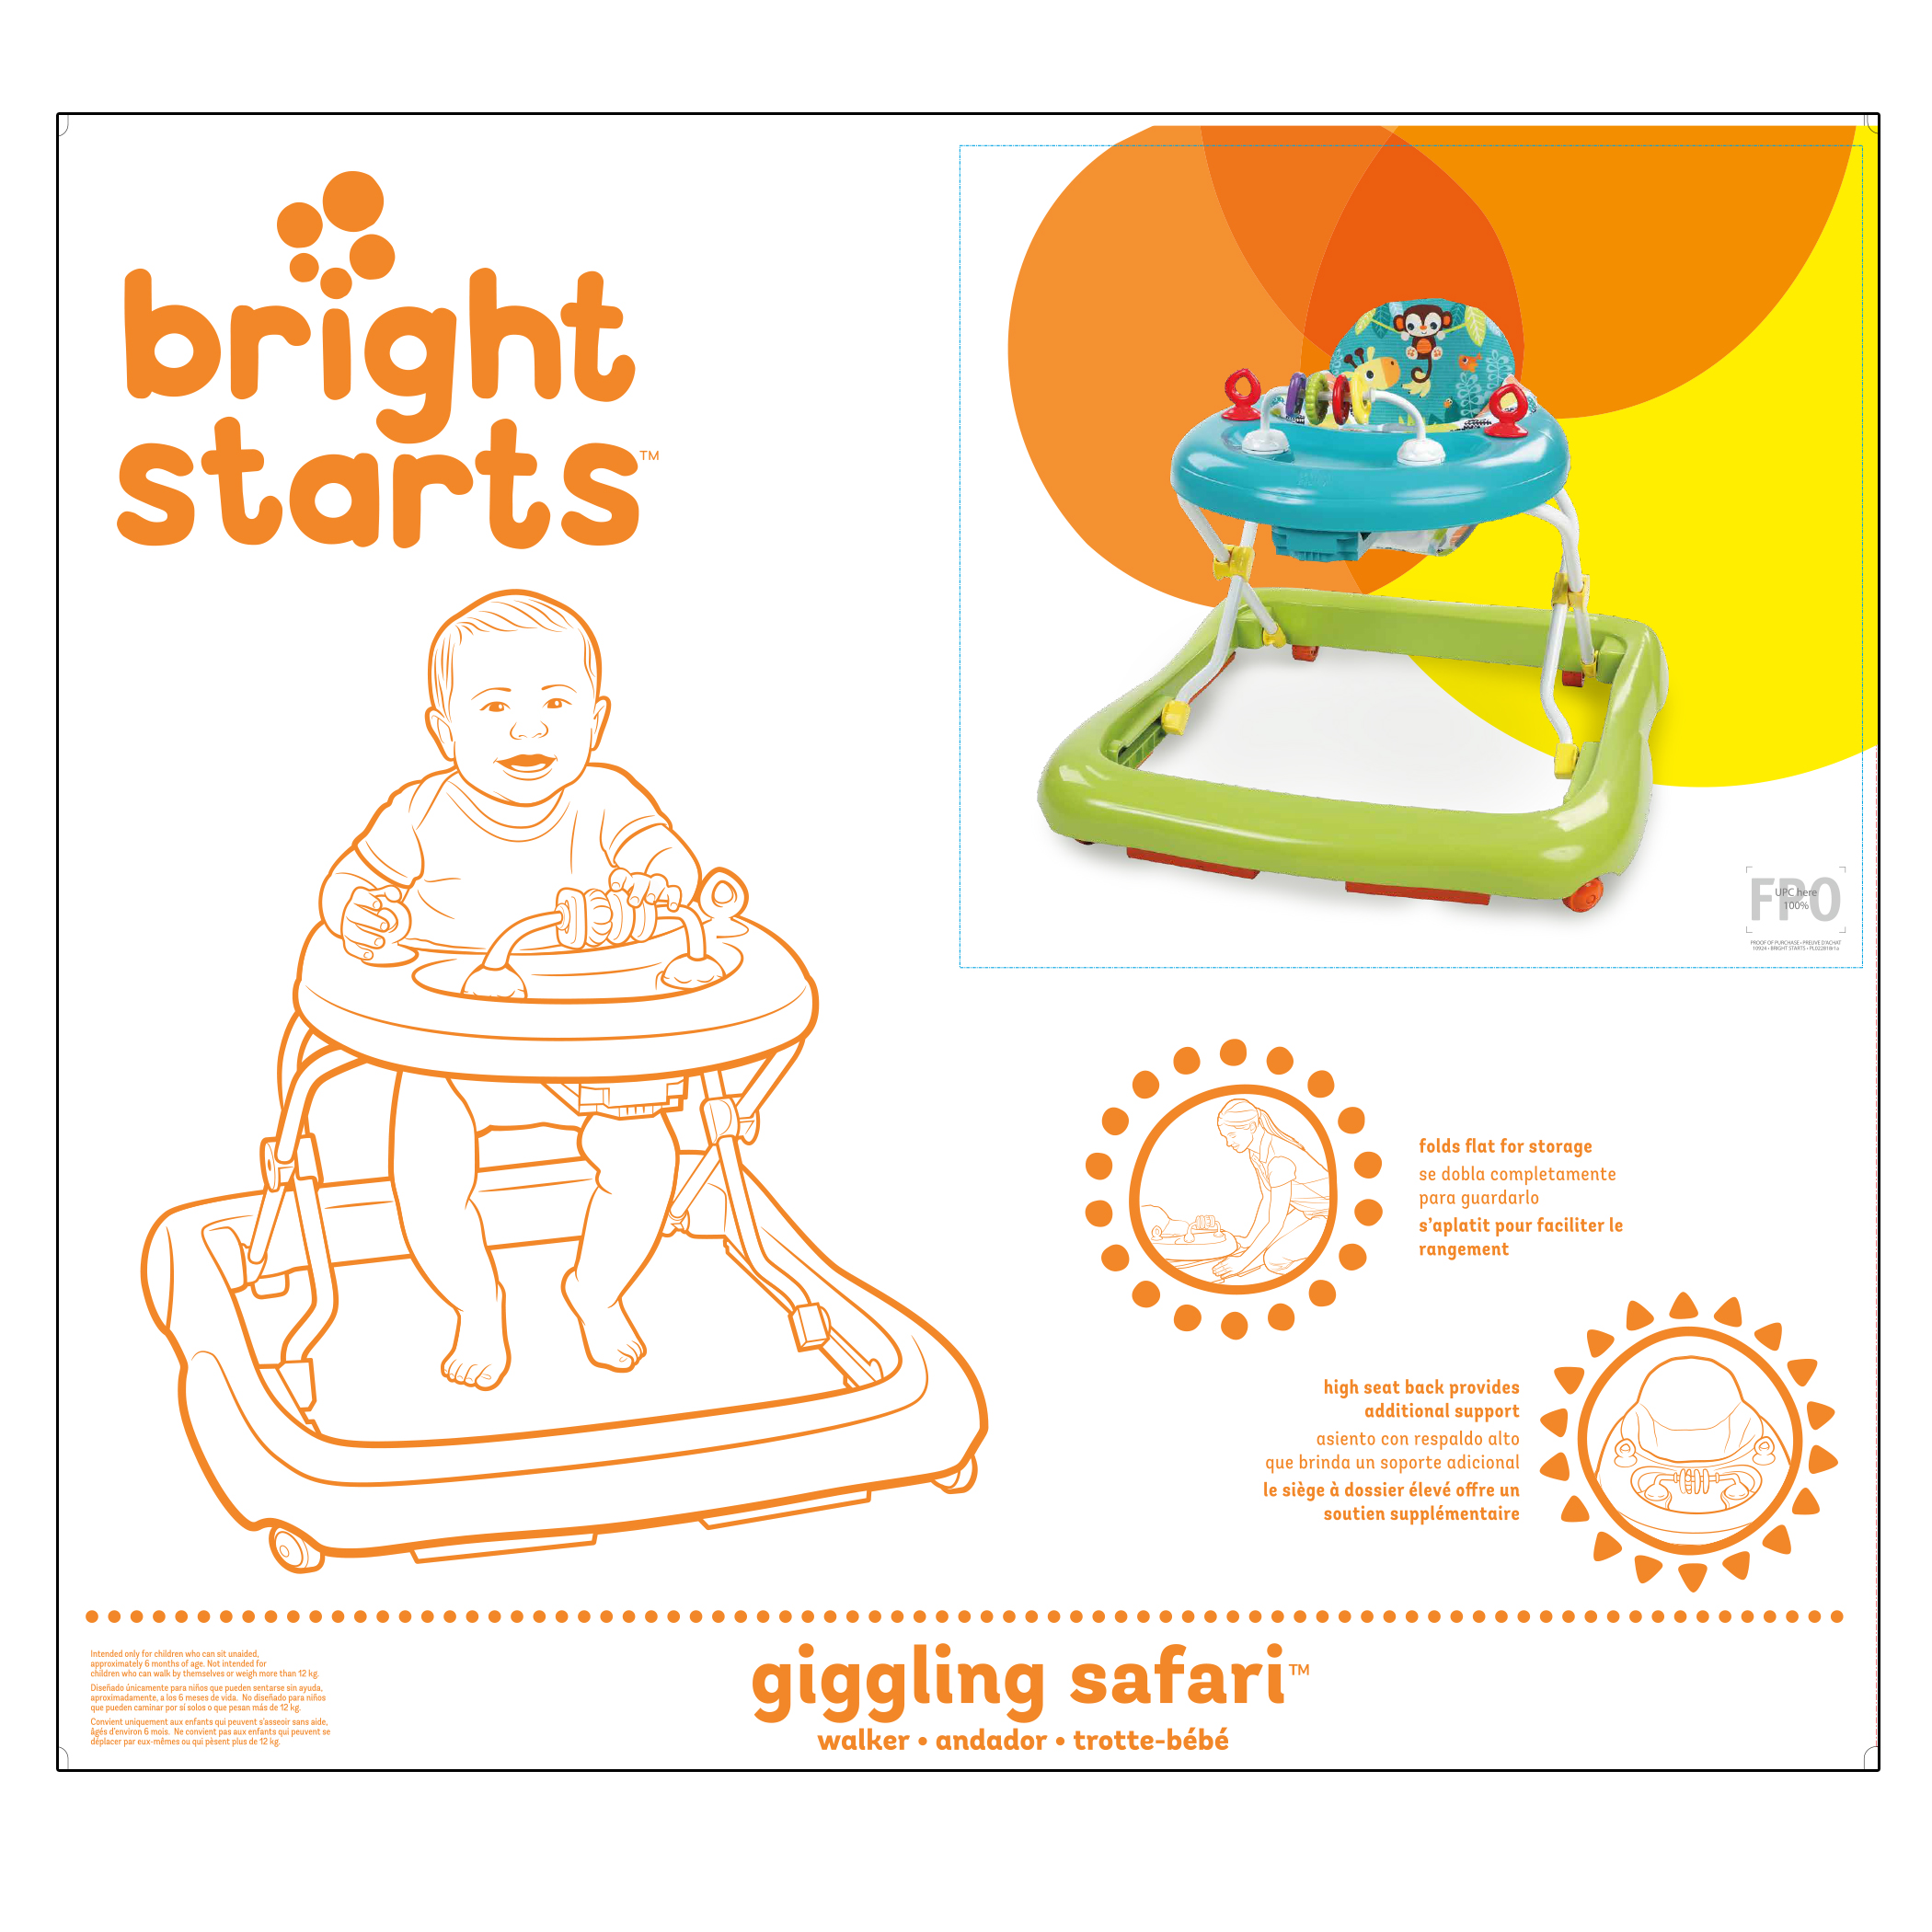 bright starts giggling safari walker manual